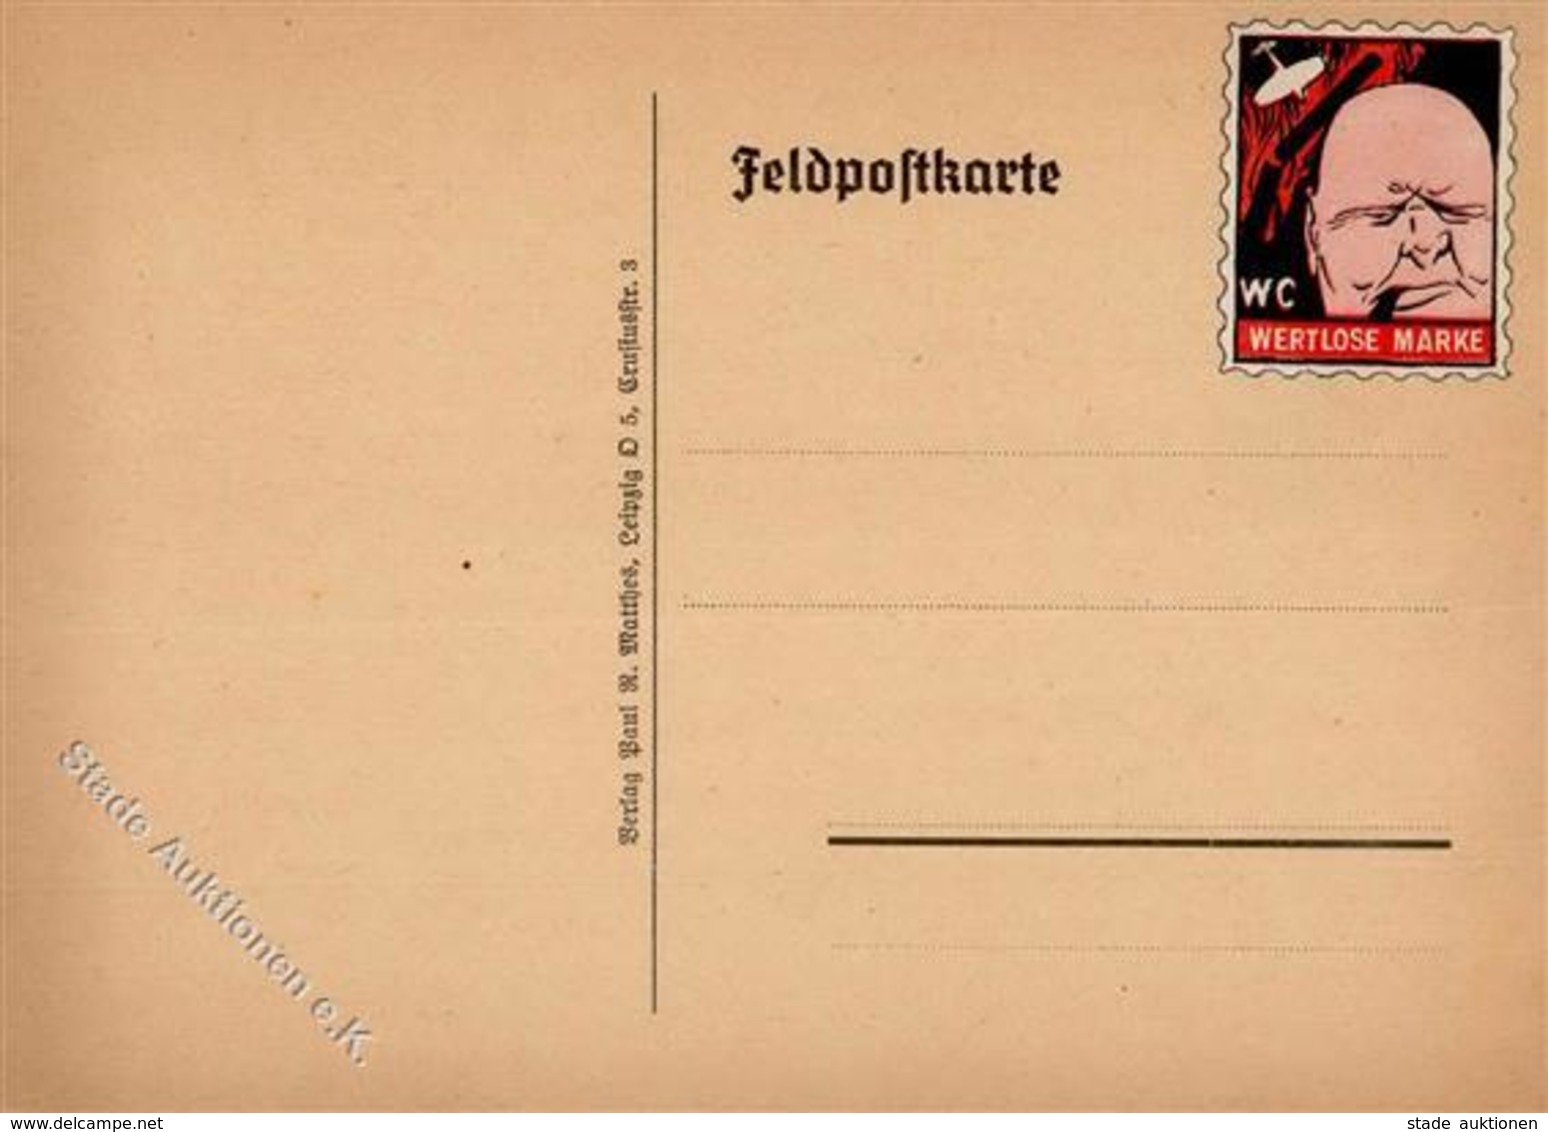 FELDPOST WK II - Feldpostspottkarte  CHURCHILL Mit VIGNETTE -WERTLOSE MARKE- I I - Guerre 1939-45